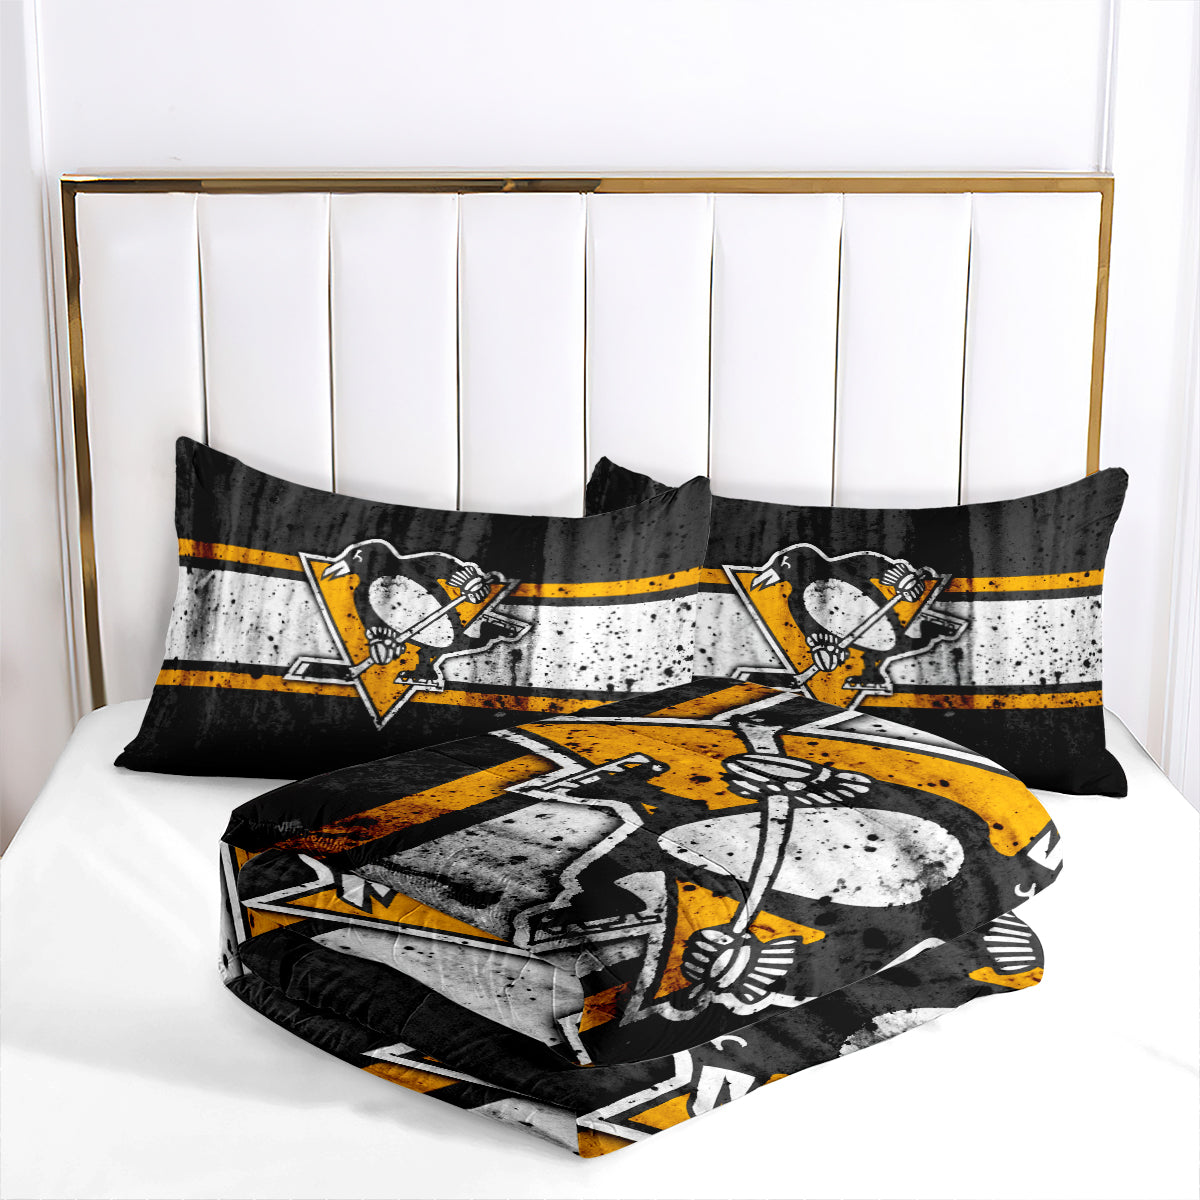 Pittsburgh Hockey Penguins Comforter Pillowcases 3PC Sets Blanket All Season Reversible Quilted Duvet